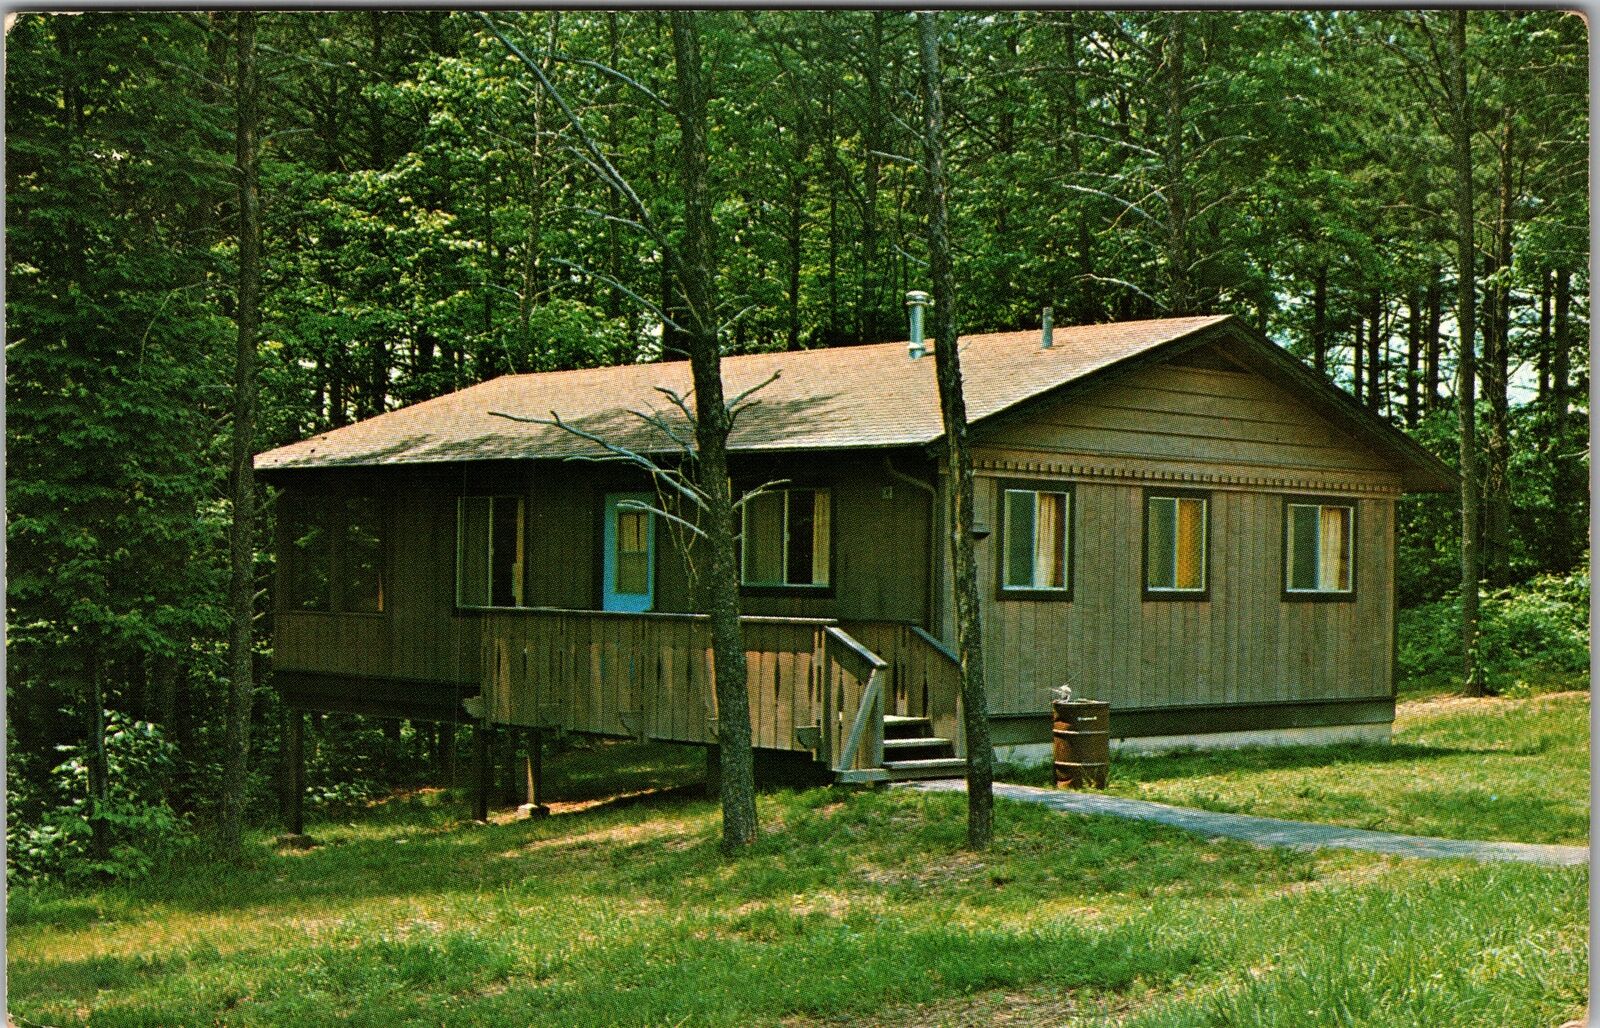 Logan OH-Ohio, House Keeping Cabins, Hocking Hills, Vintage Postcard